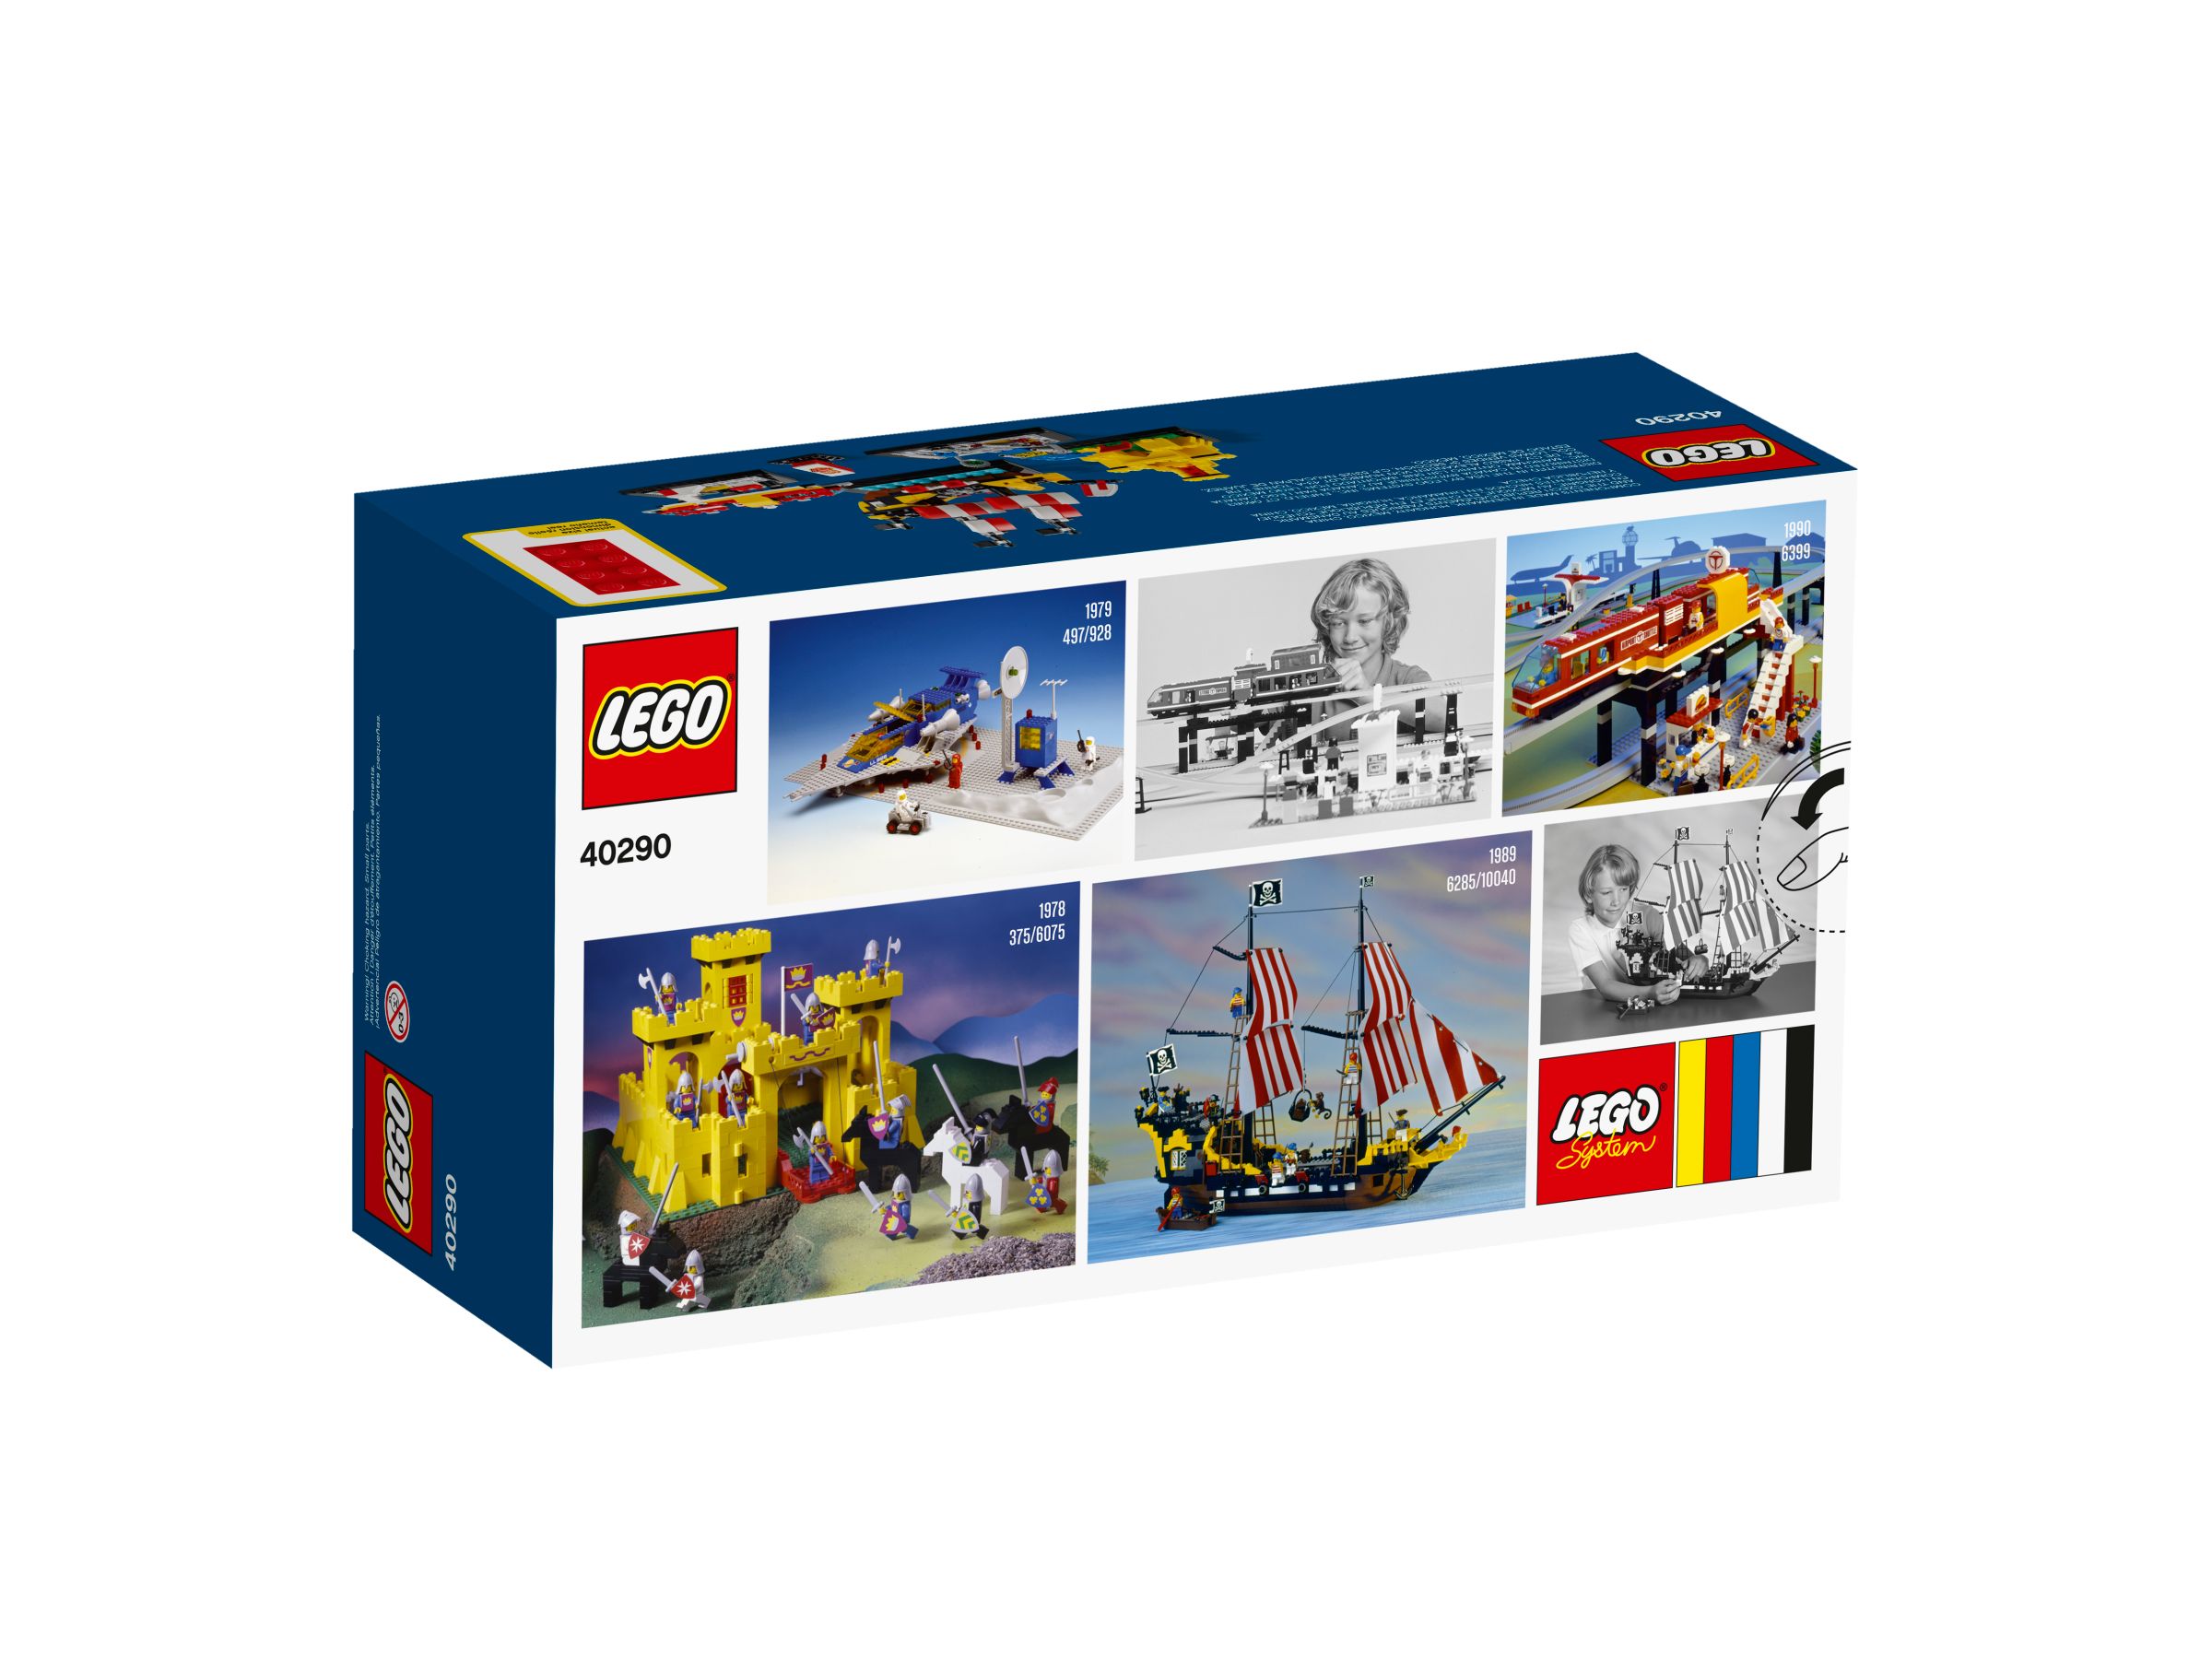 LEGO_40290_alt2.jpg